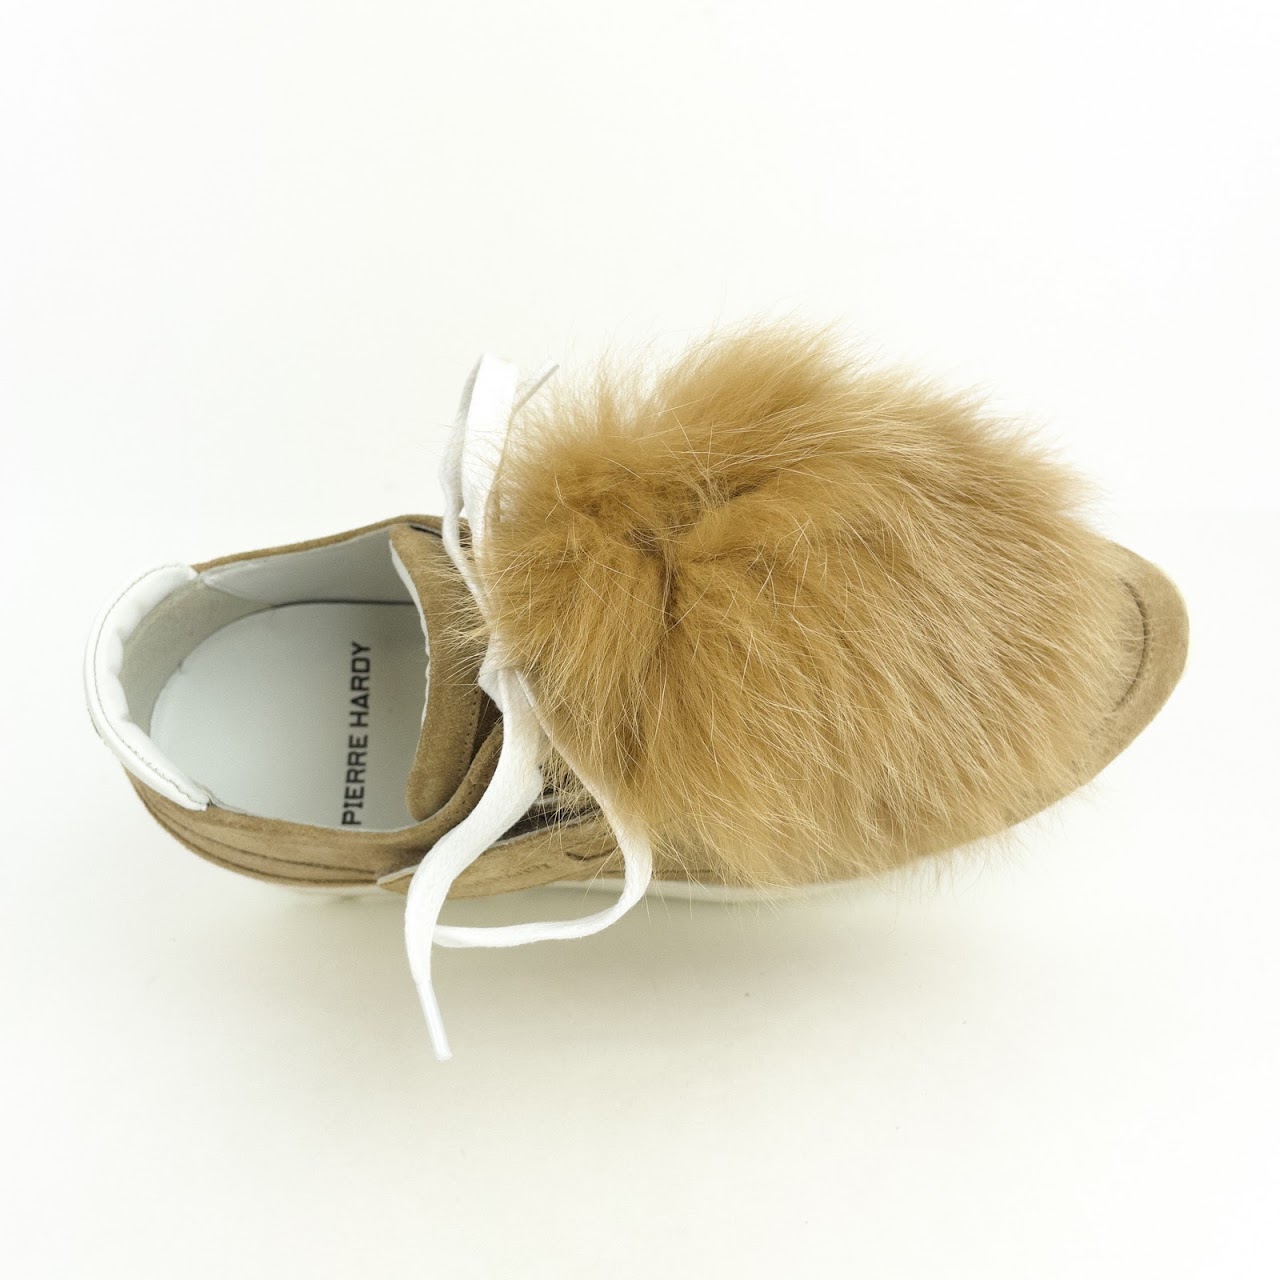 Pierre Hardy Suede & Rabbit Fur Sneakers